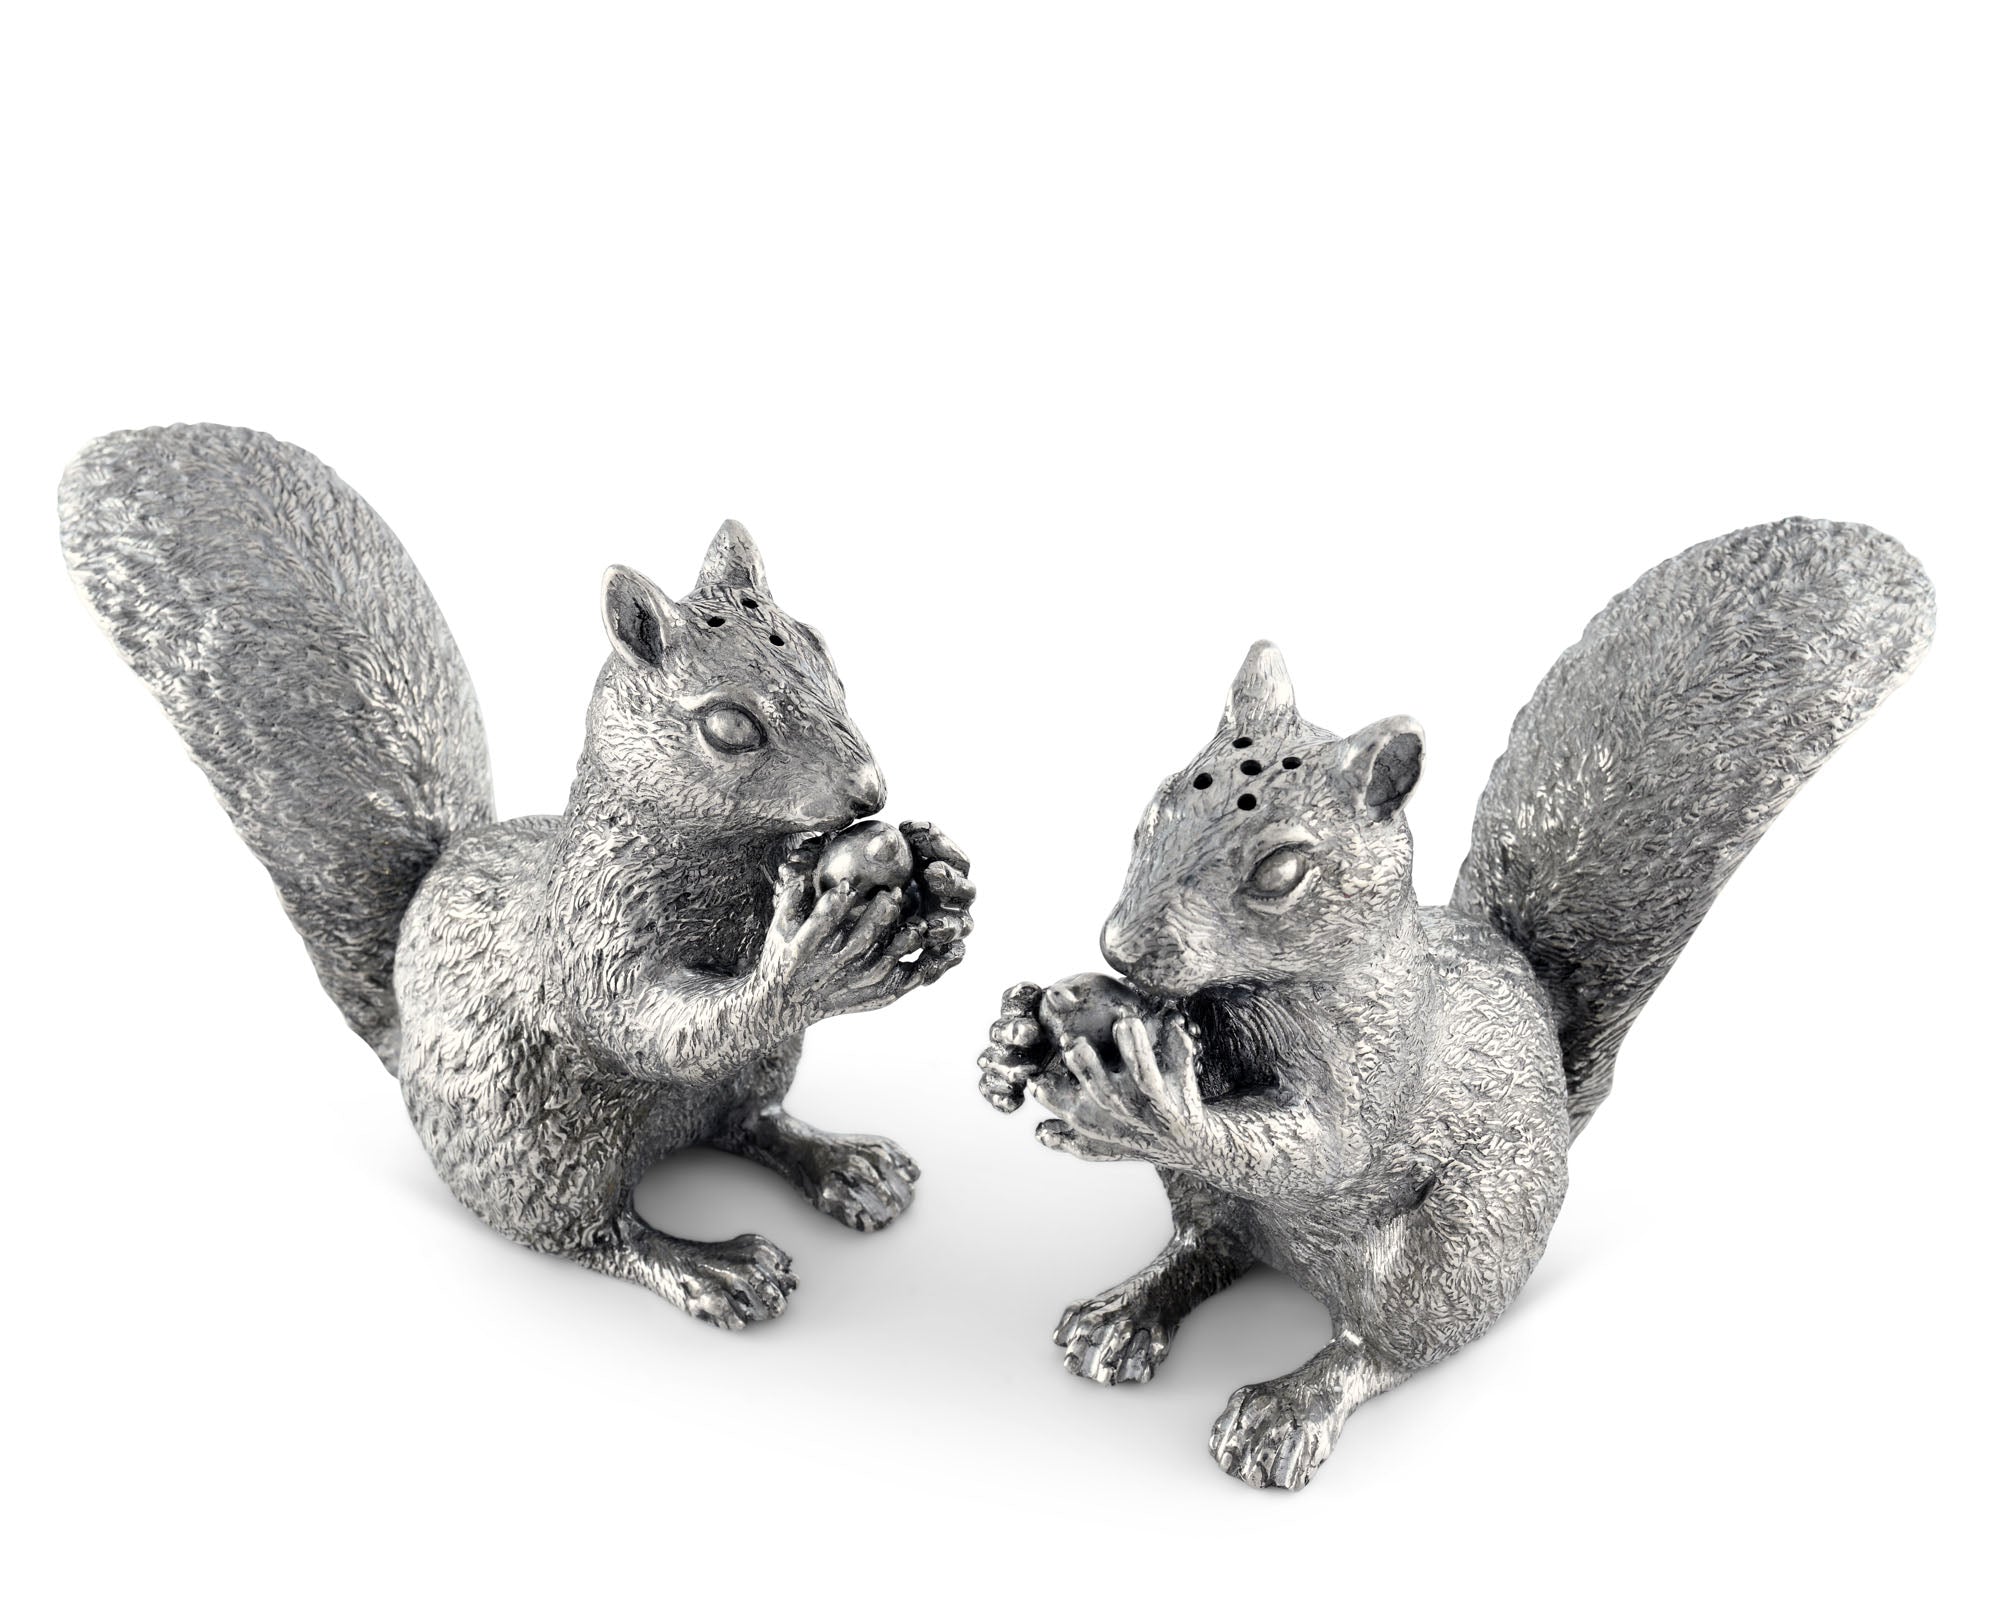 Vagabond House Pewter Squirrels Salt & Pepper Set Product Image